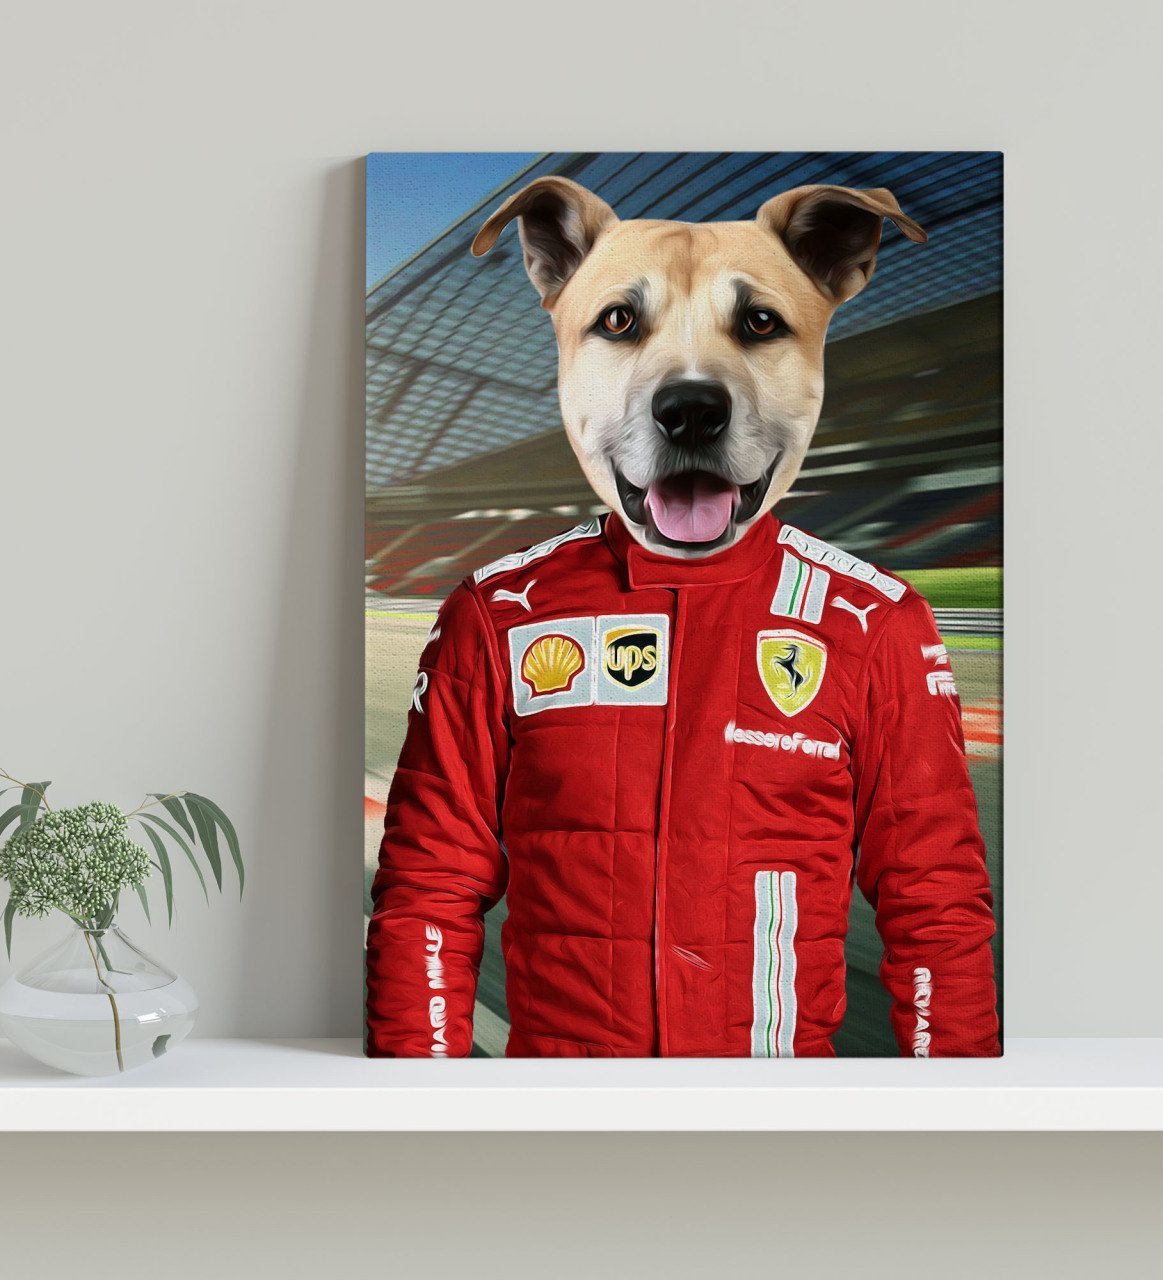 Evcil Dostlara Özel F1 Pilot Tasarımlı Portre Kanvas Tablo 30x50cm-2